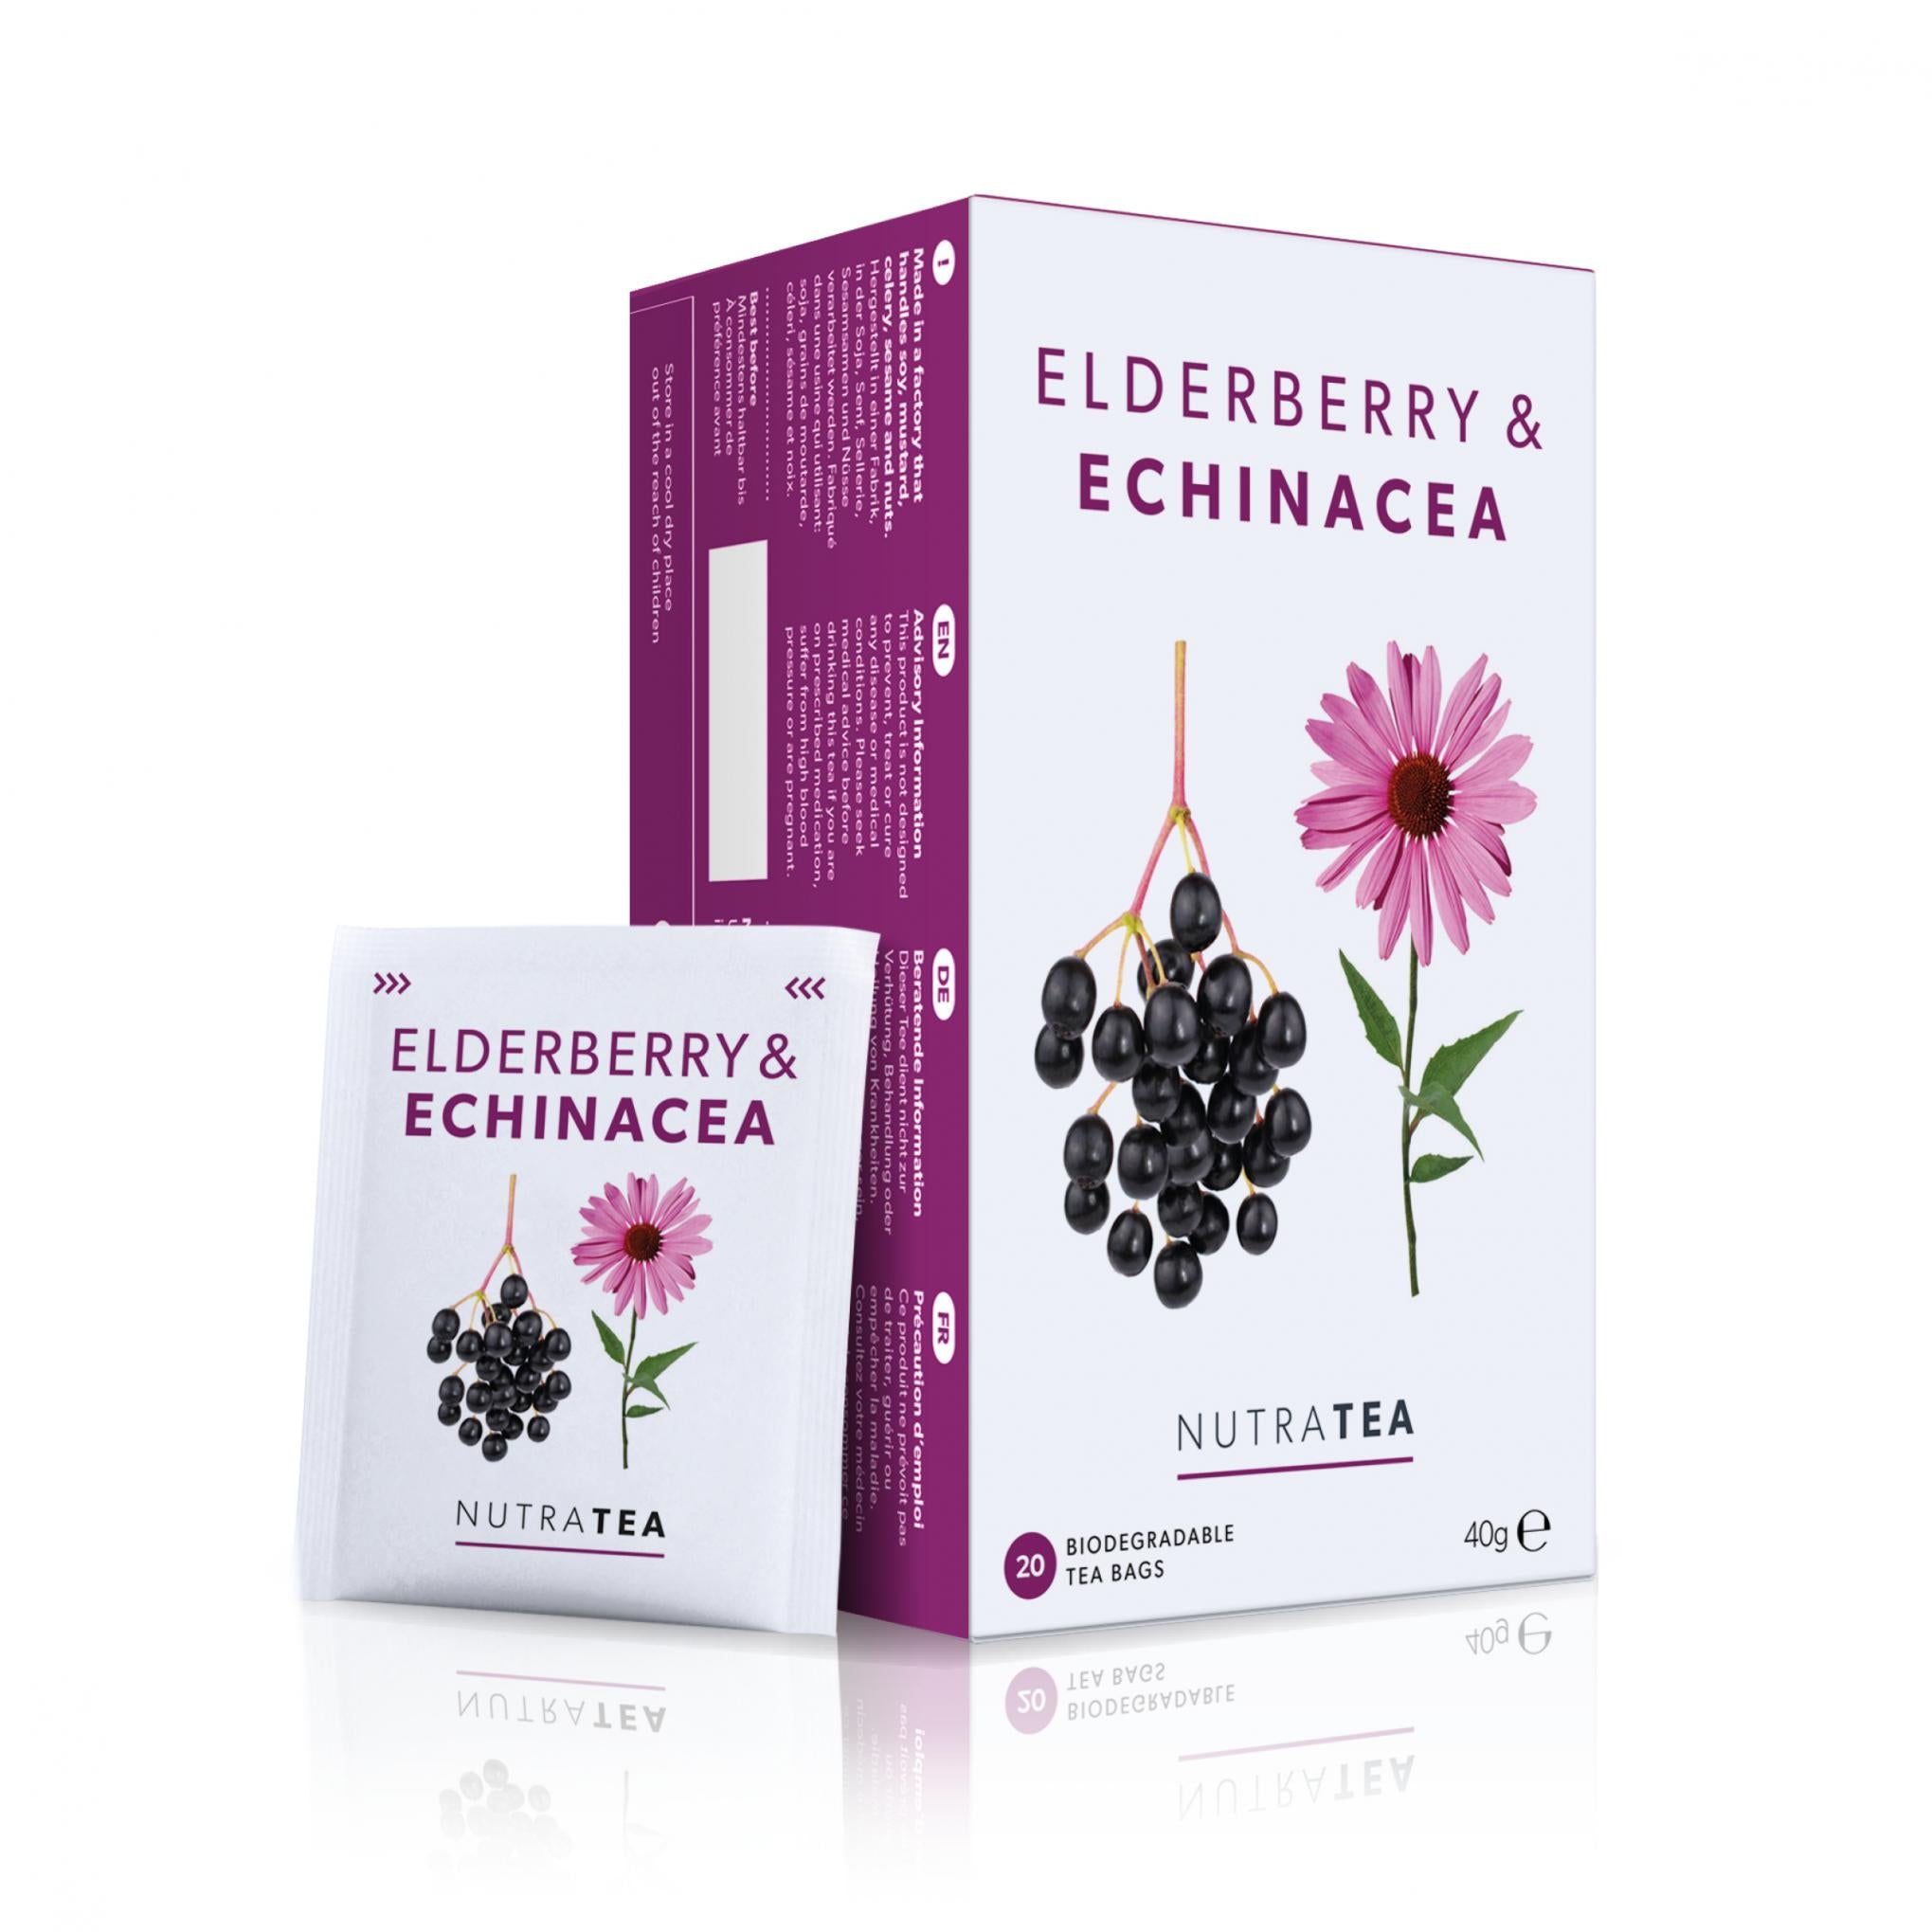 Nutratea Elderberry & Echinacea Tea Bags 20's